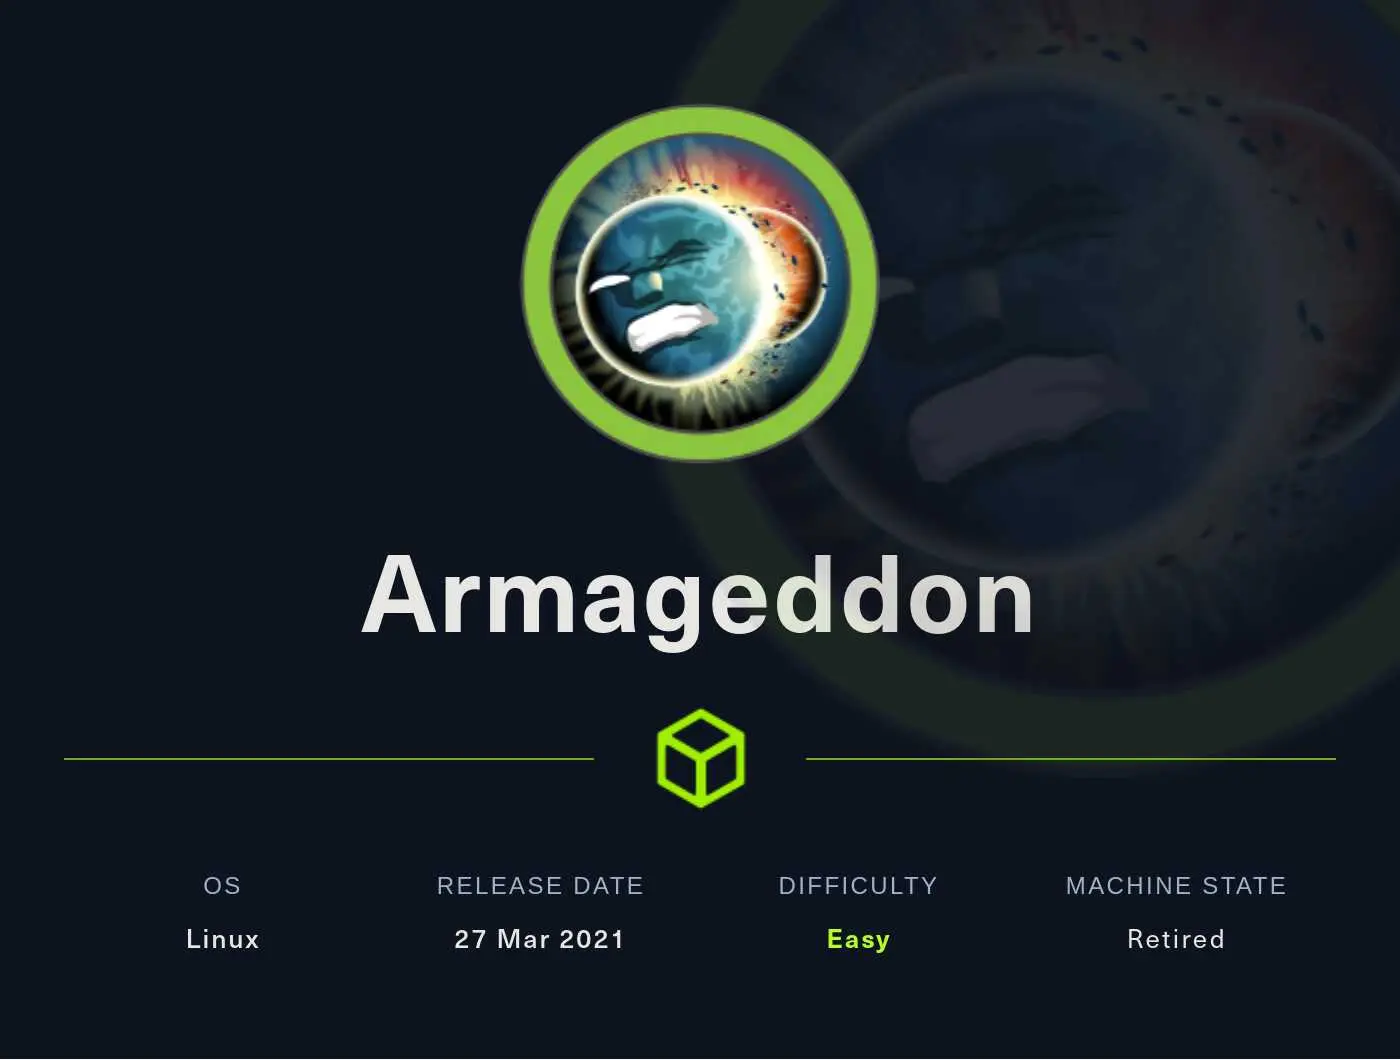 armageddon info